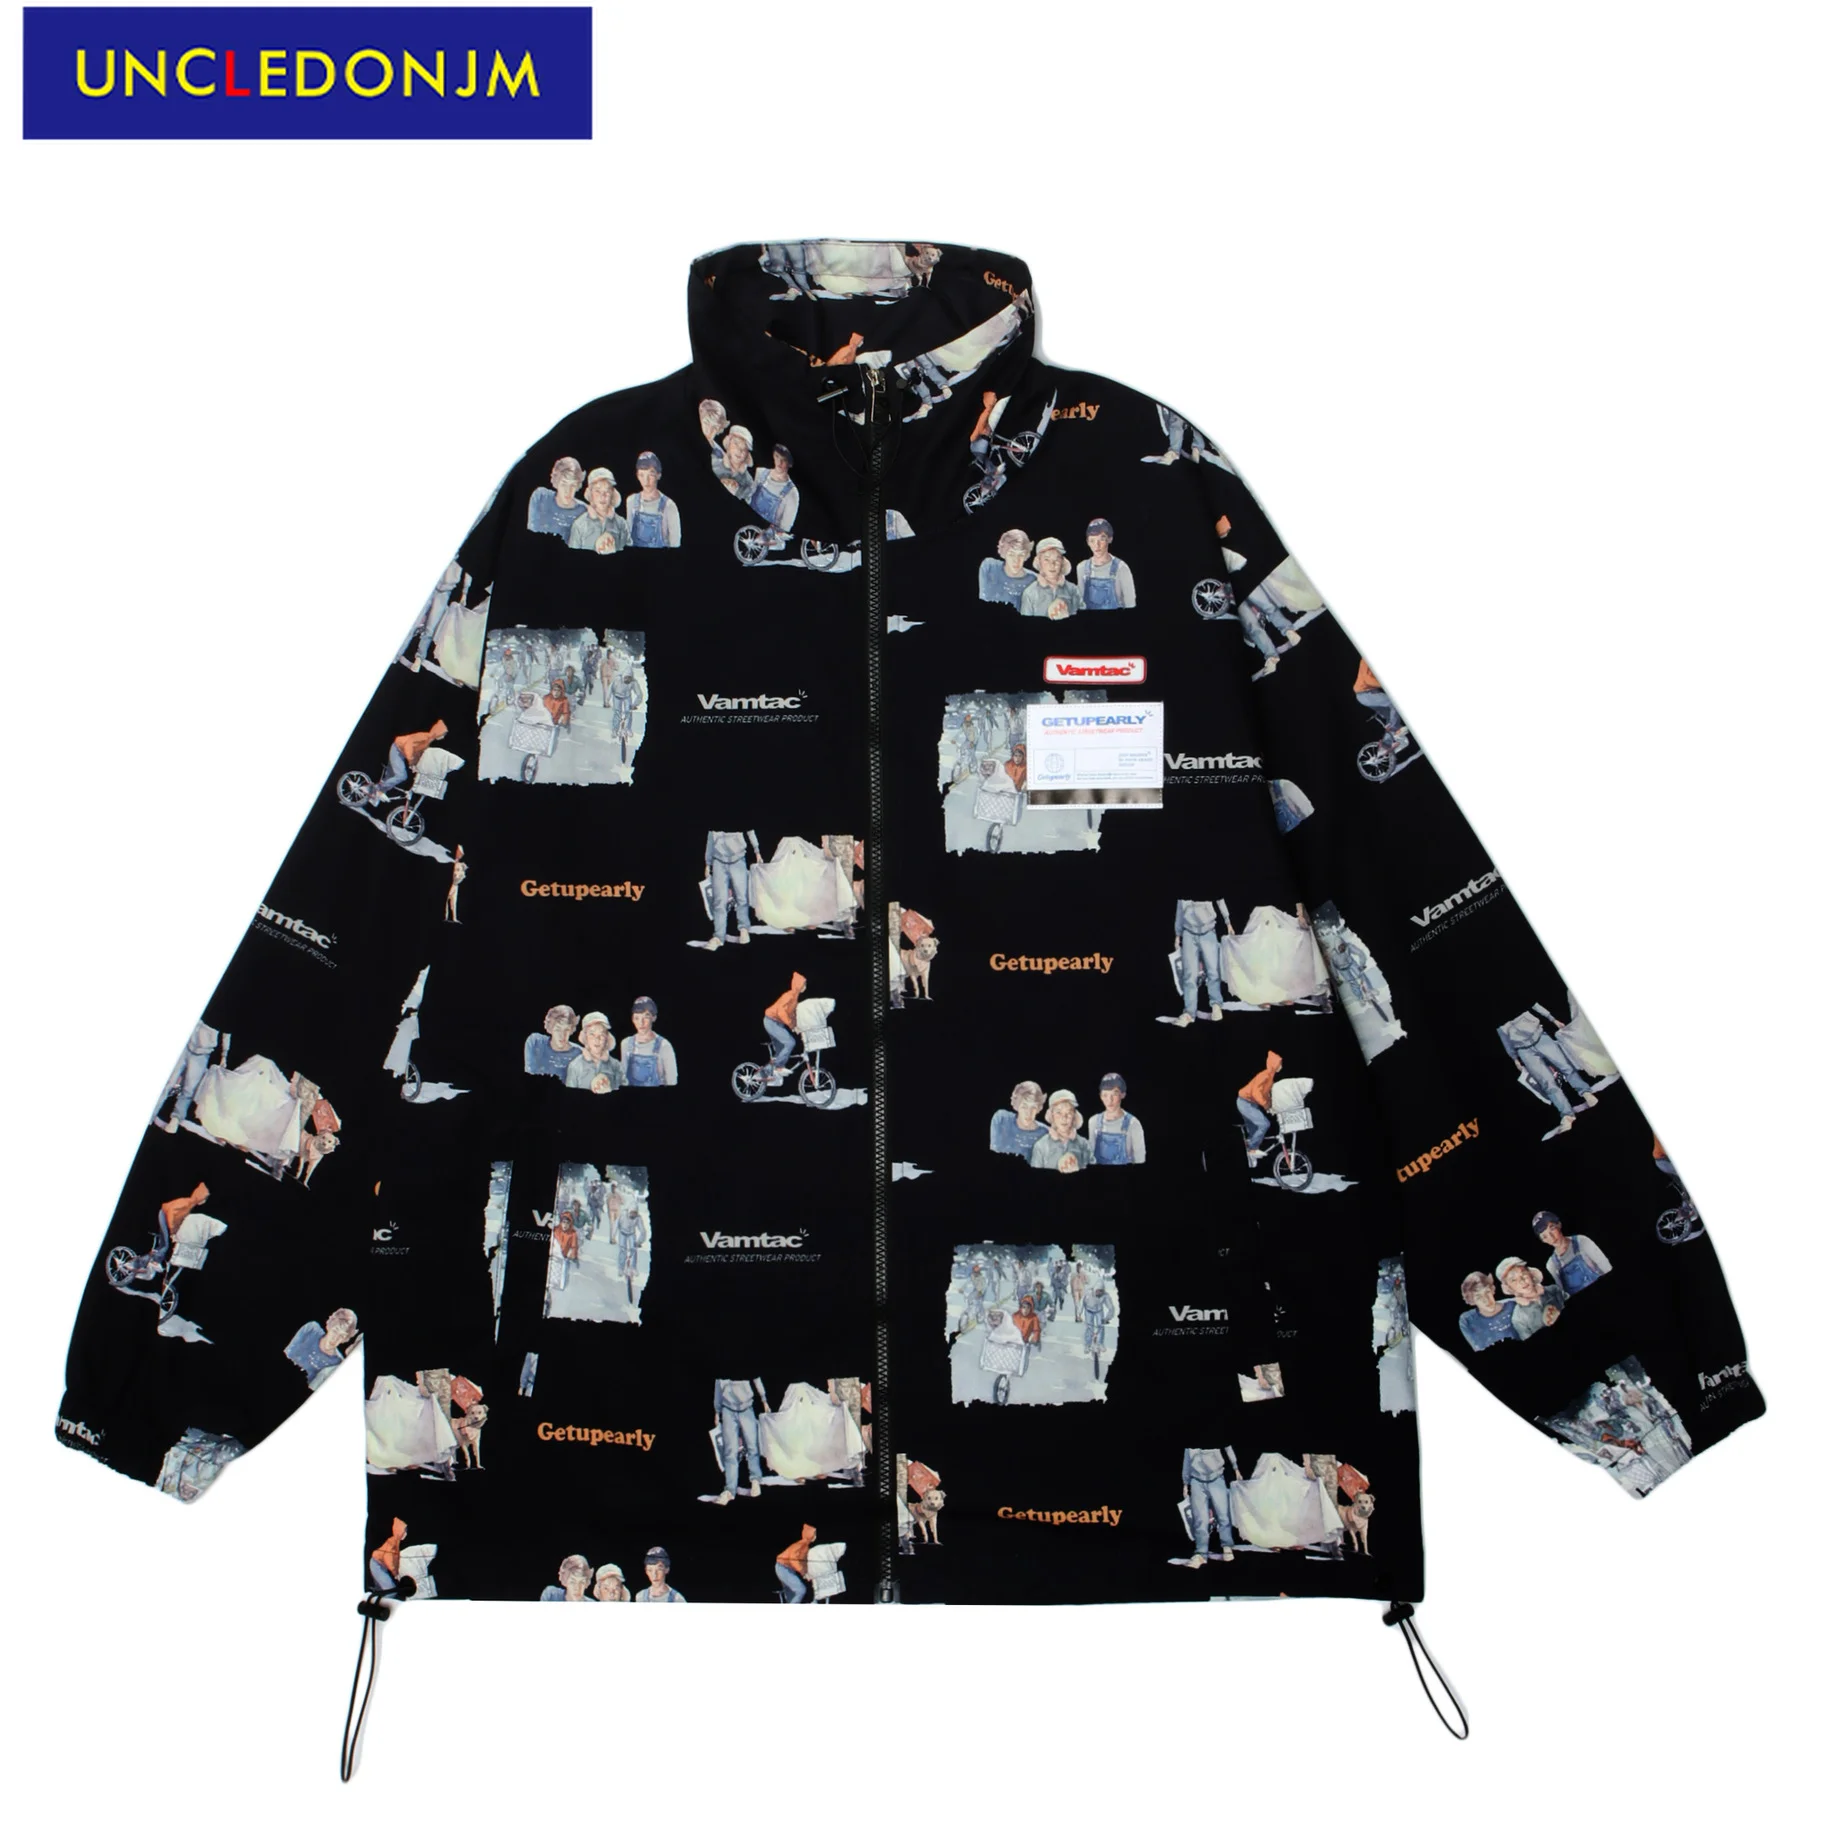 

UNCLEDONJM mens clothing windbreaker men korean jacket mens fashion clothing trends street wear jackets for men